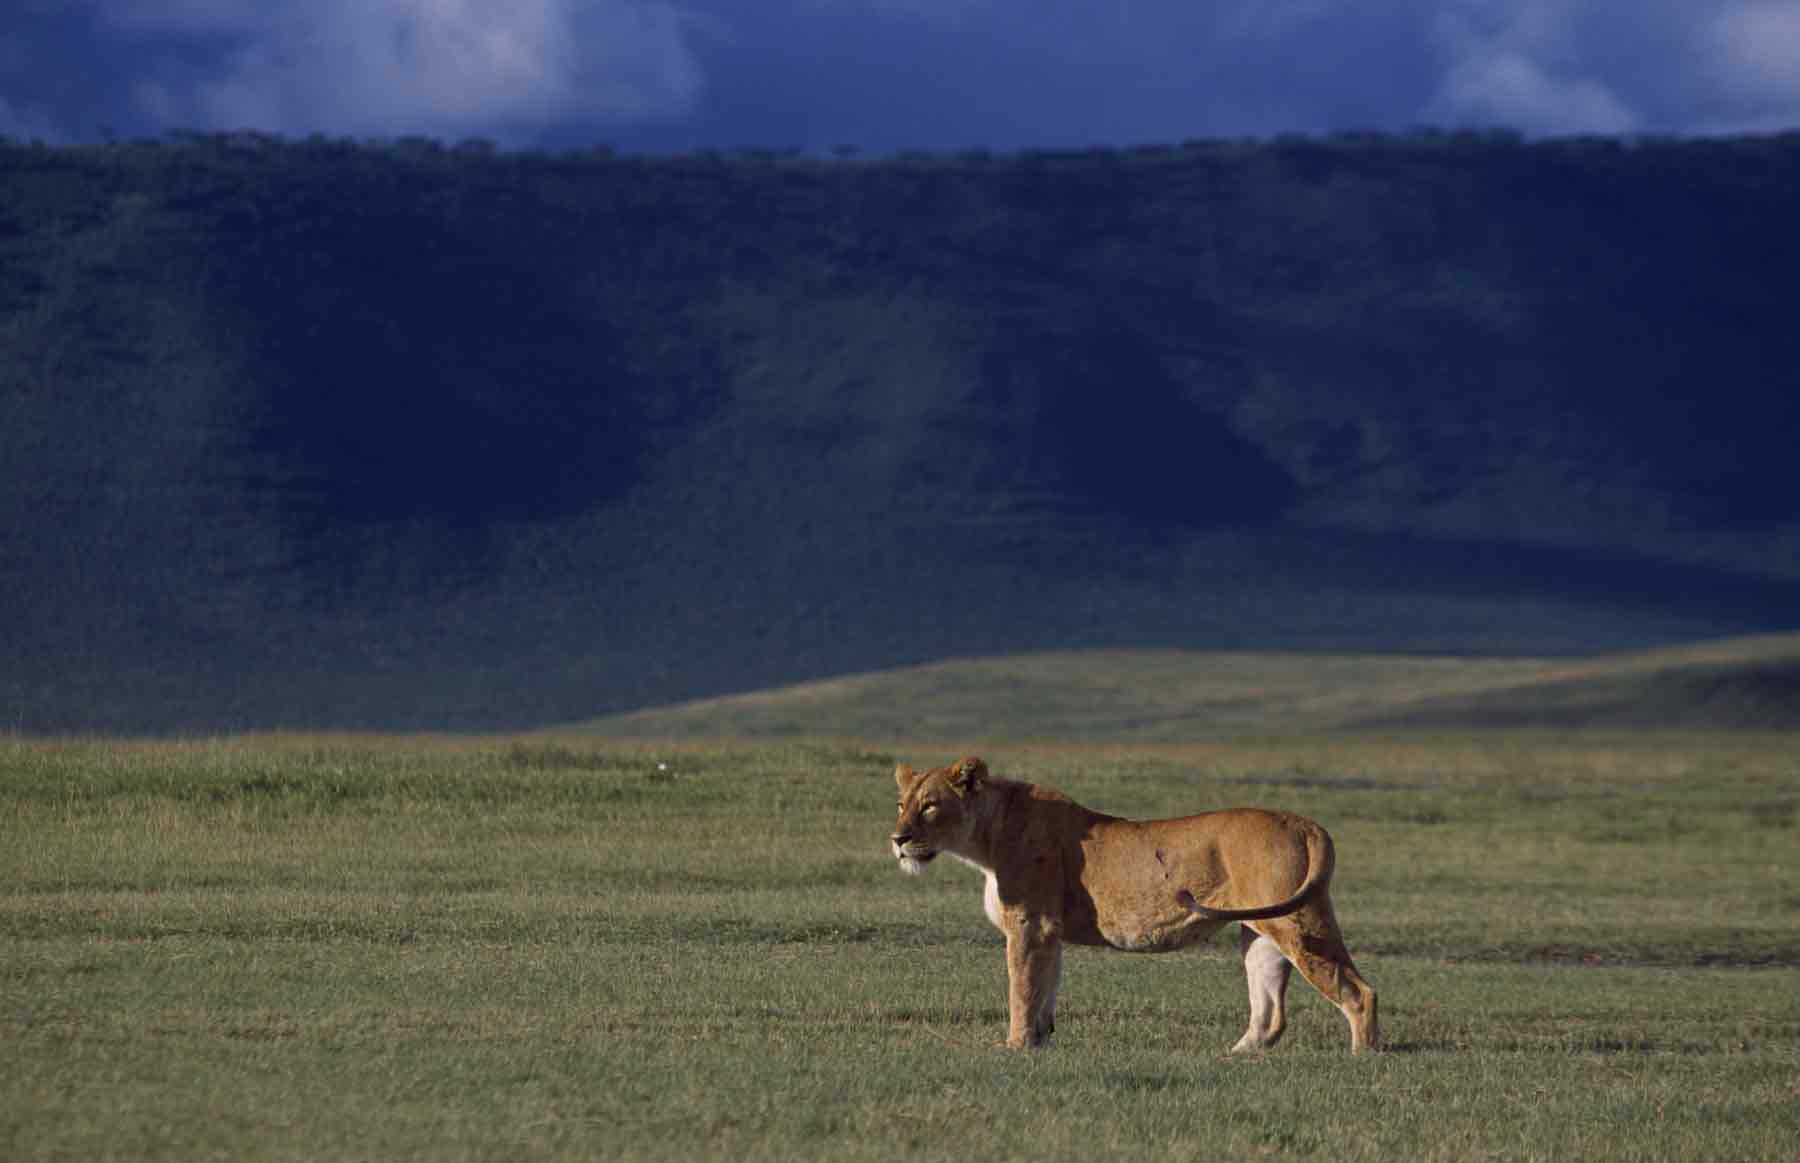 Ngorongoro Crater Floor - Animals